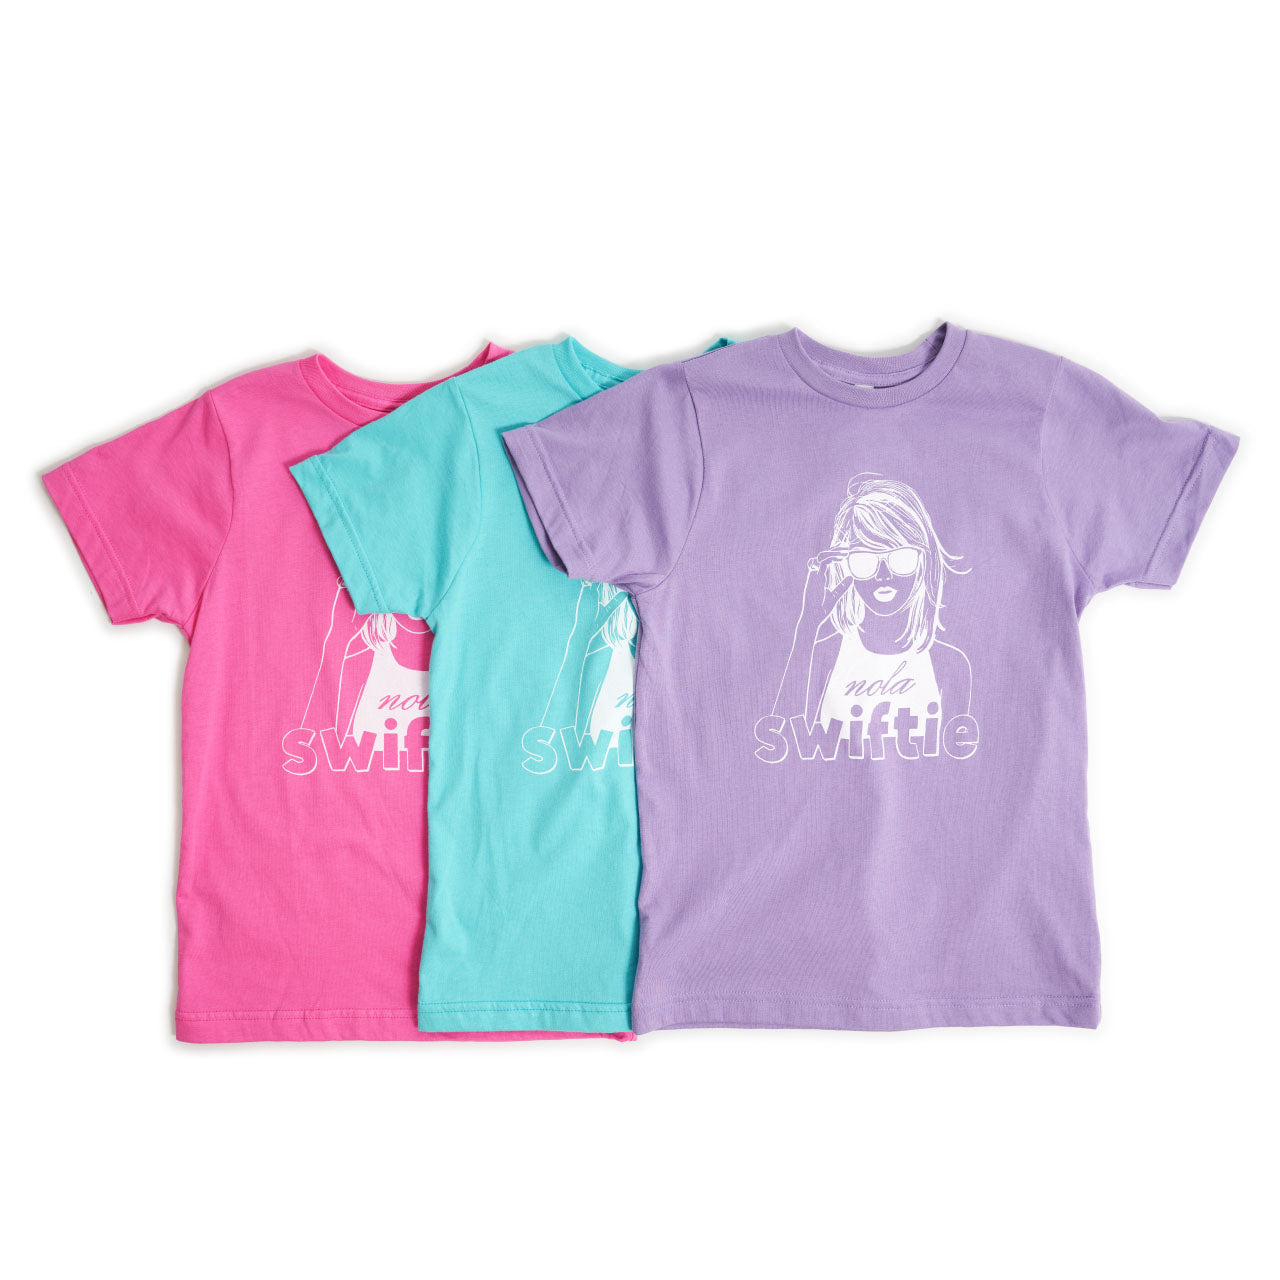 NOLA Swiftie T-shirts